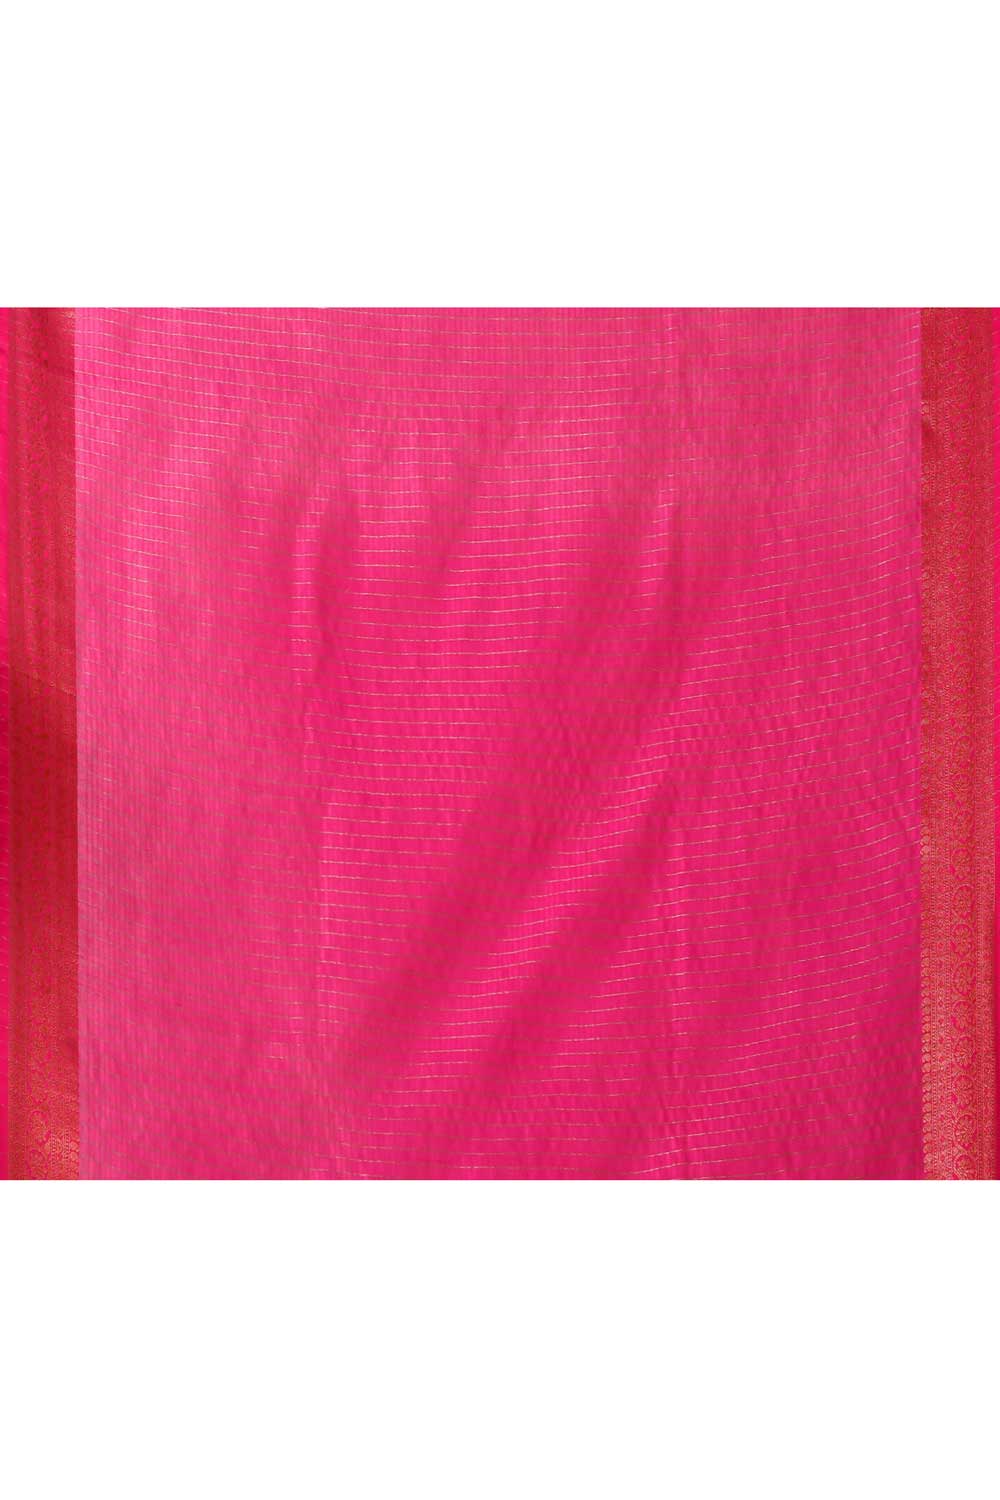 Rani Pink Pure Cotton Silk Banarasi Handloom Saree With Handwoven Meenakari Boota